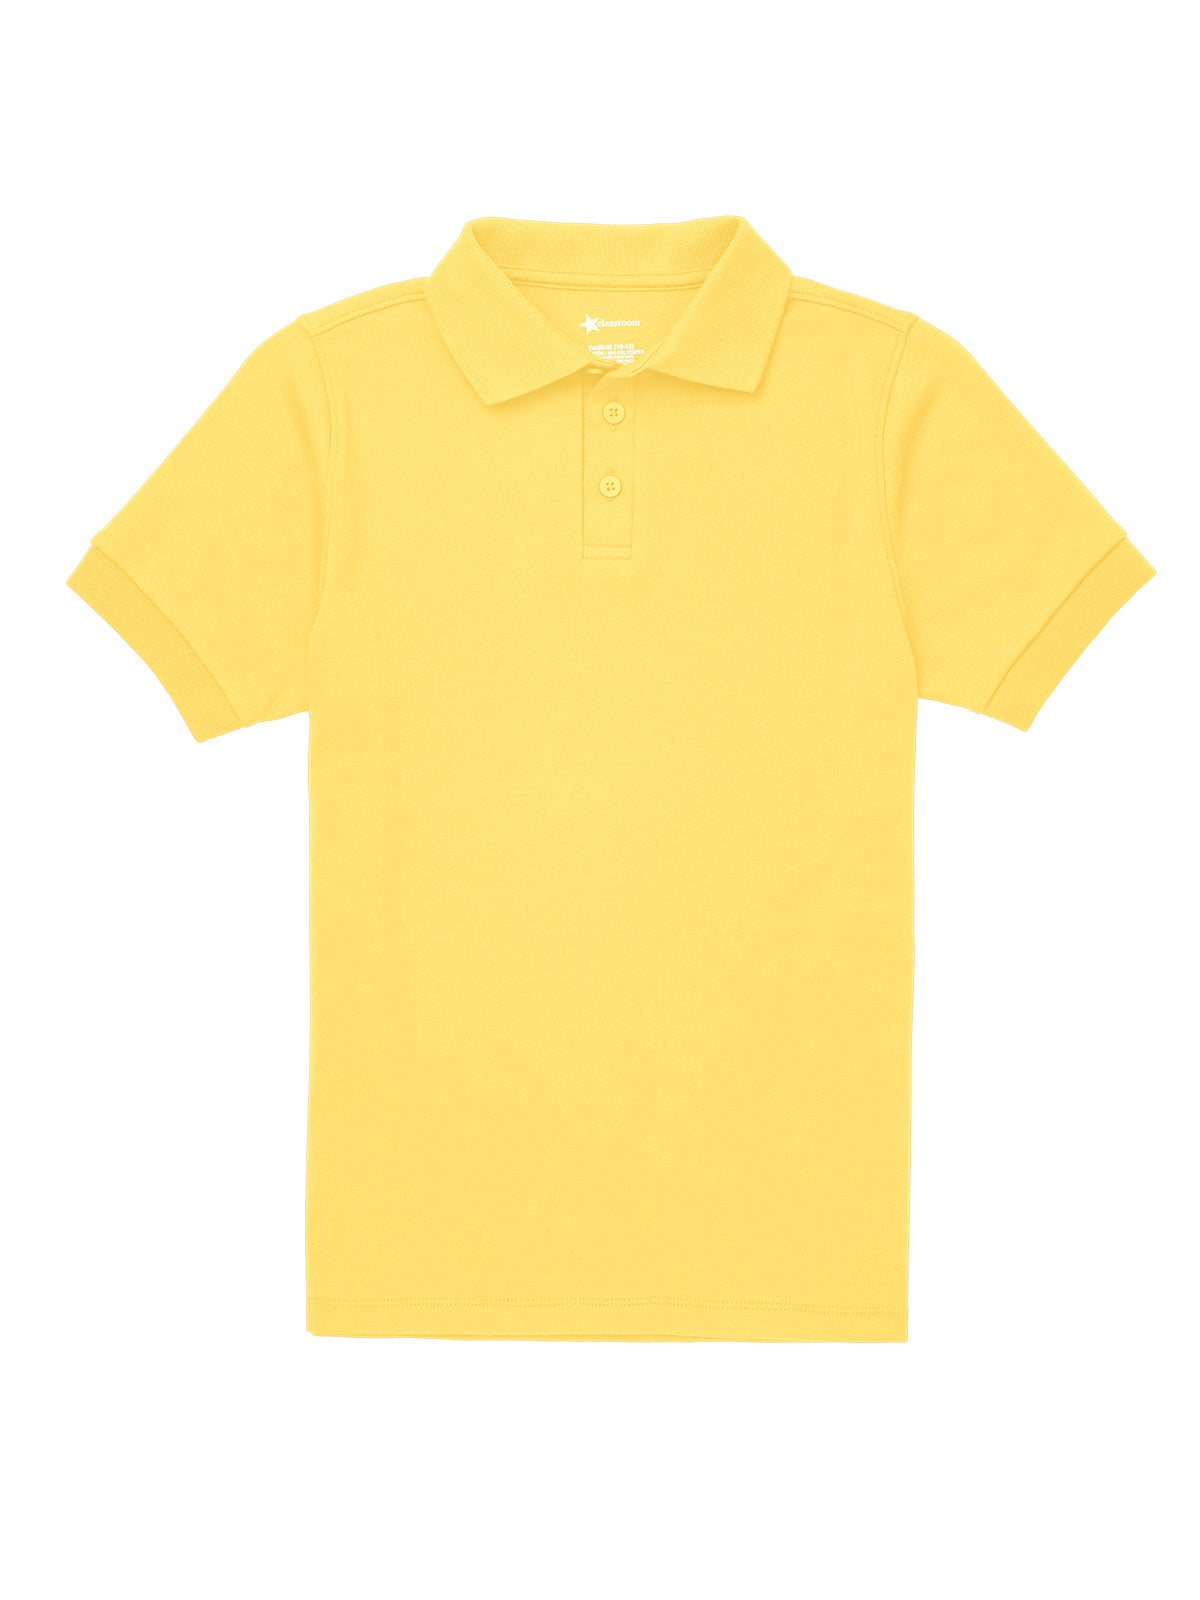 Youth Short Sleeve Interlock Polo - CR891Y - Yellow